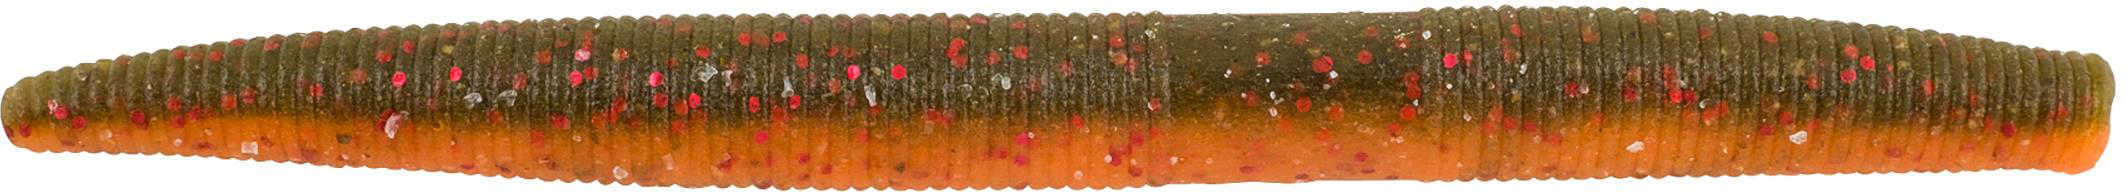 Berkley MaxScent The General Soft Bait 5" Length, Watermelon Copper/Orange with Red, Per 8 Md: 1436796